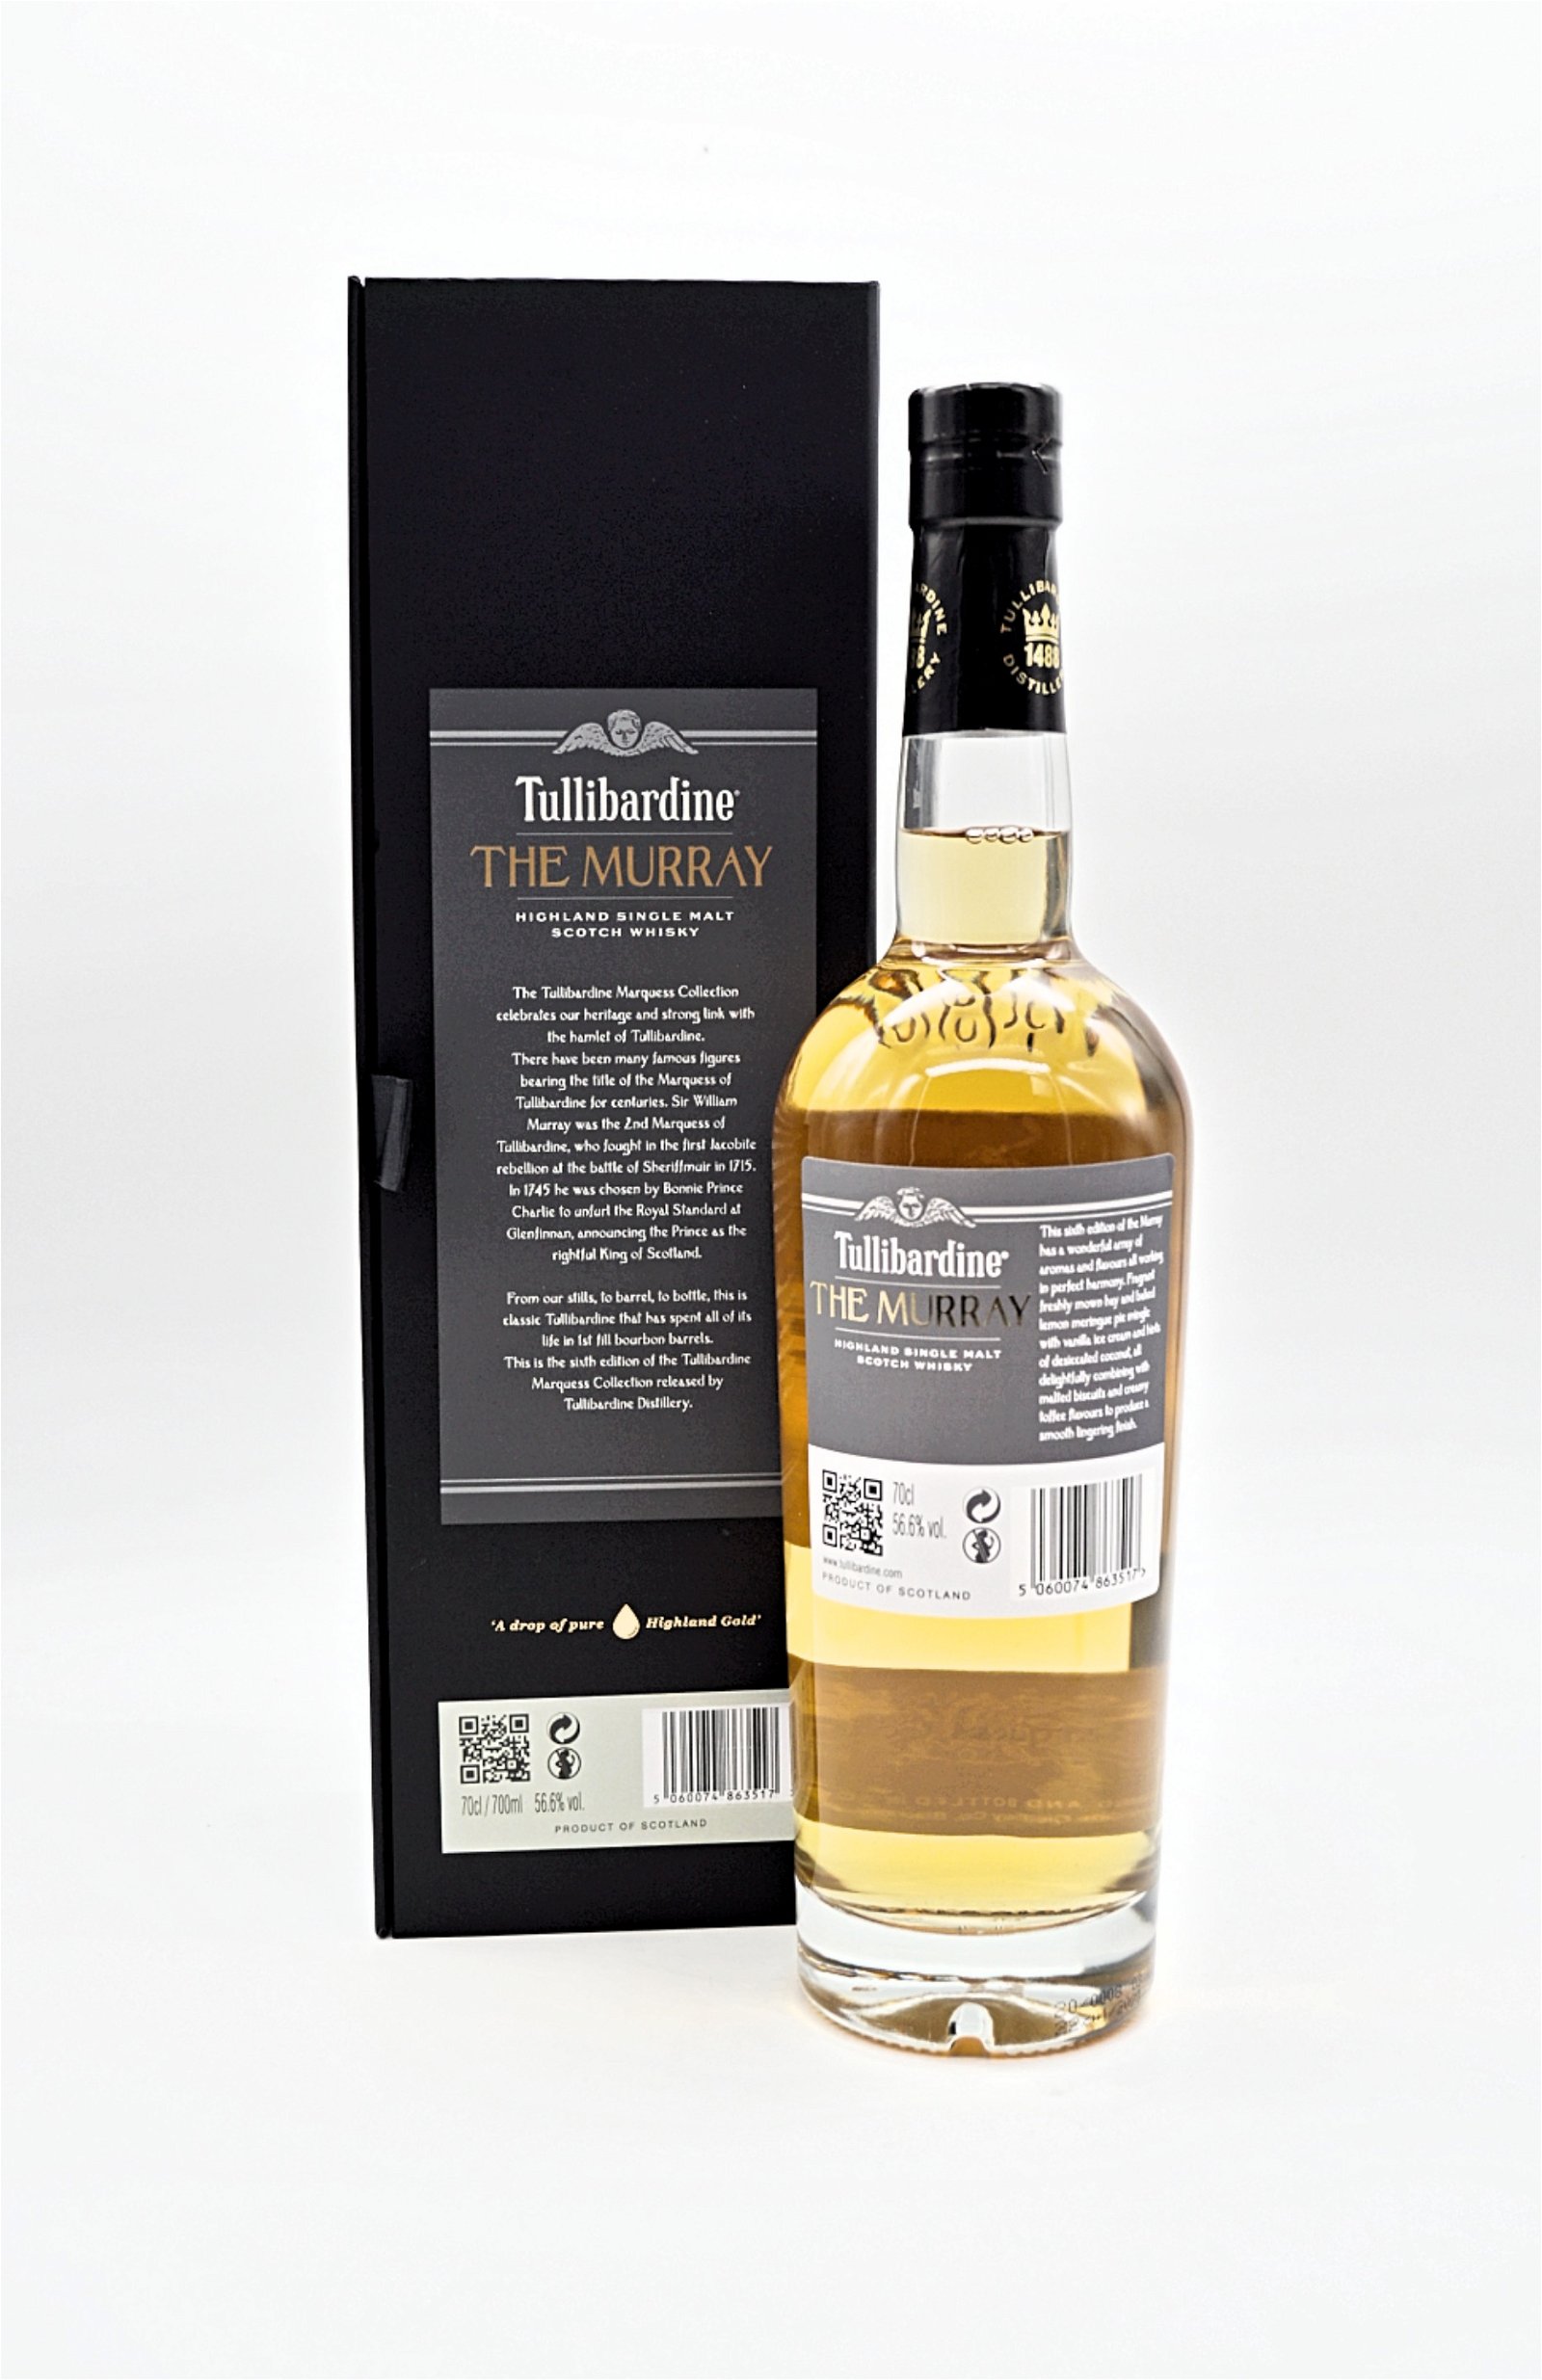 Tullibardine The Murray 2007/2019 The Marquess Collection Cask Strength Highland Single Malt Scotch Whisky